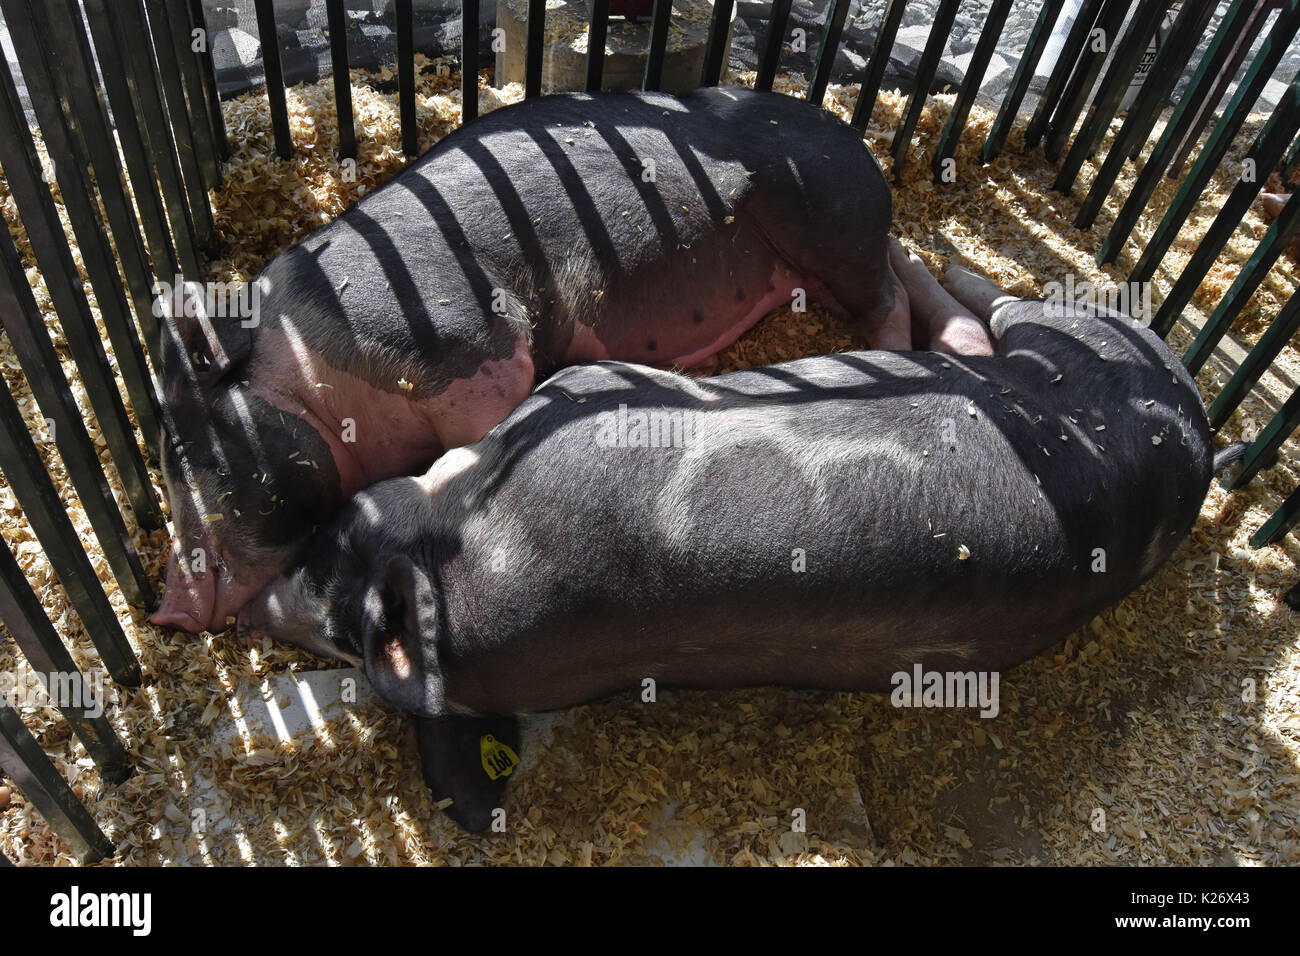 Pigs in pen sleep under artful shadowed light Stock Photo